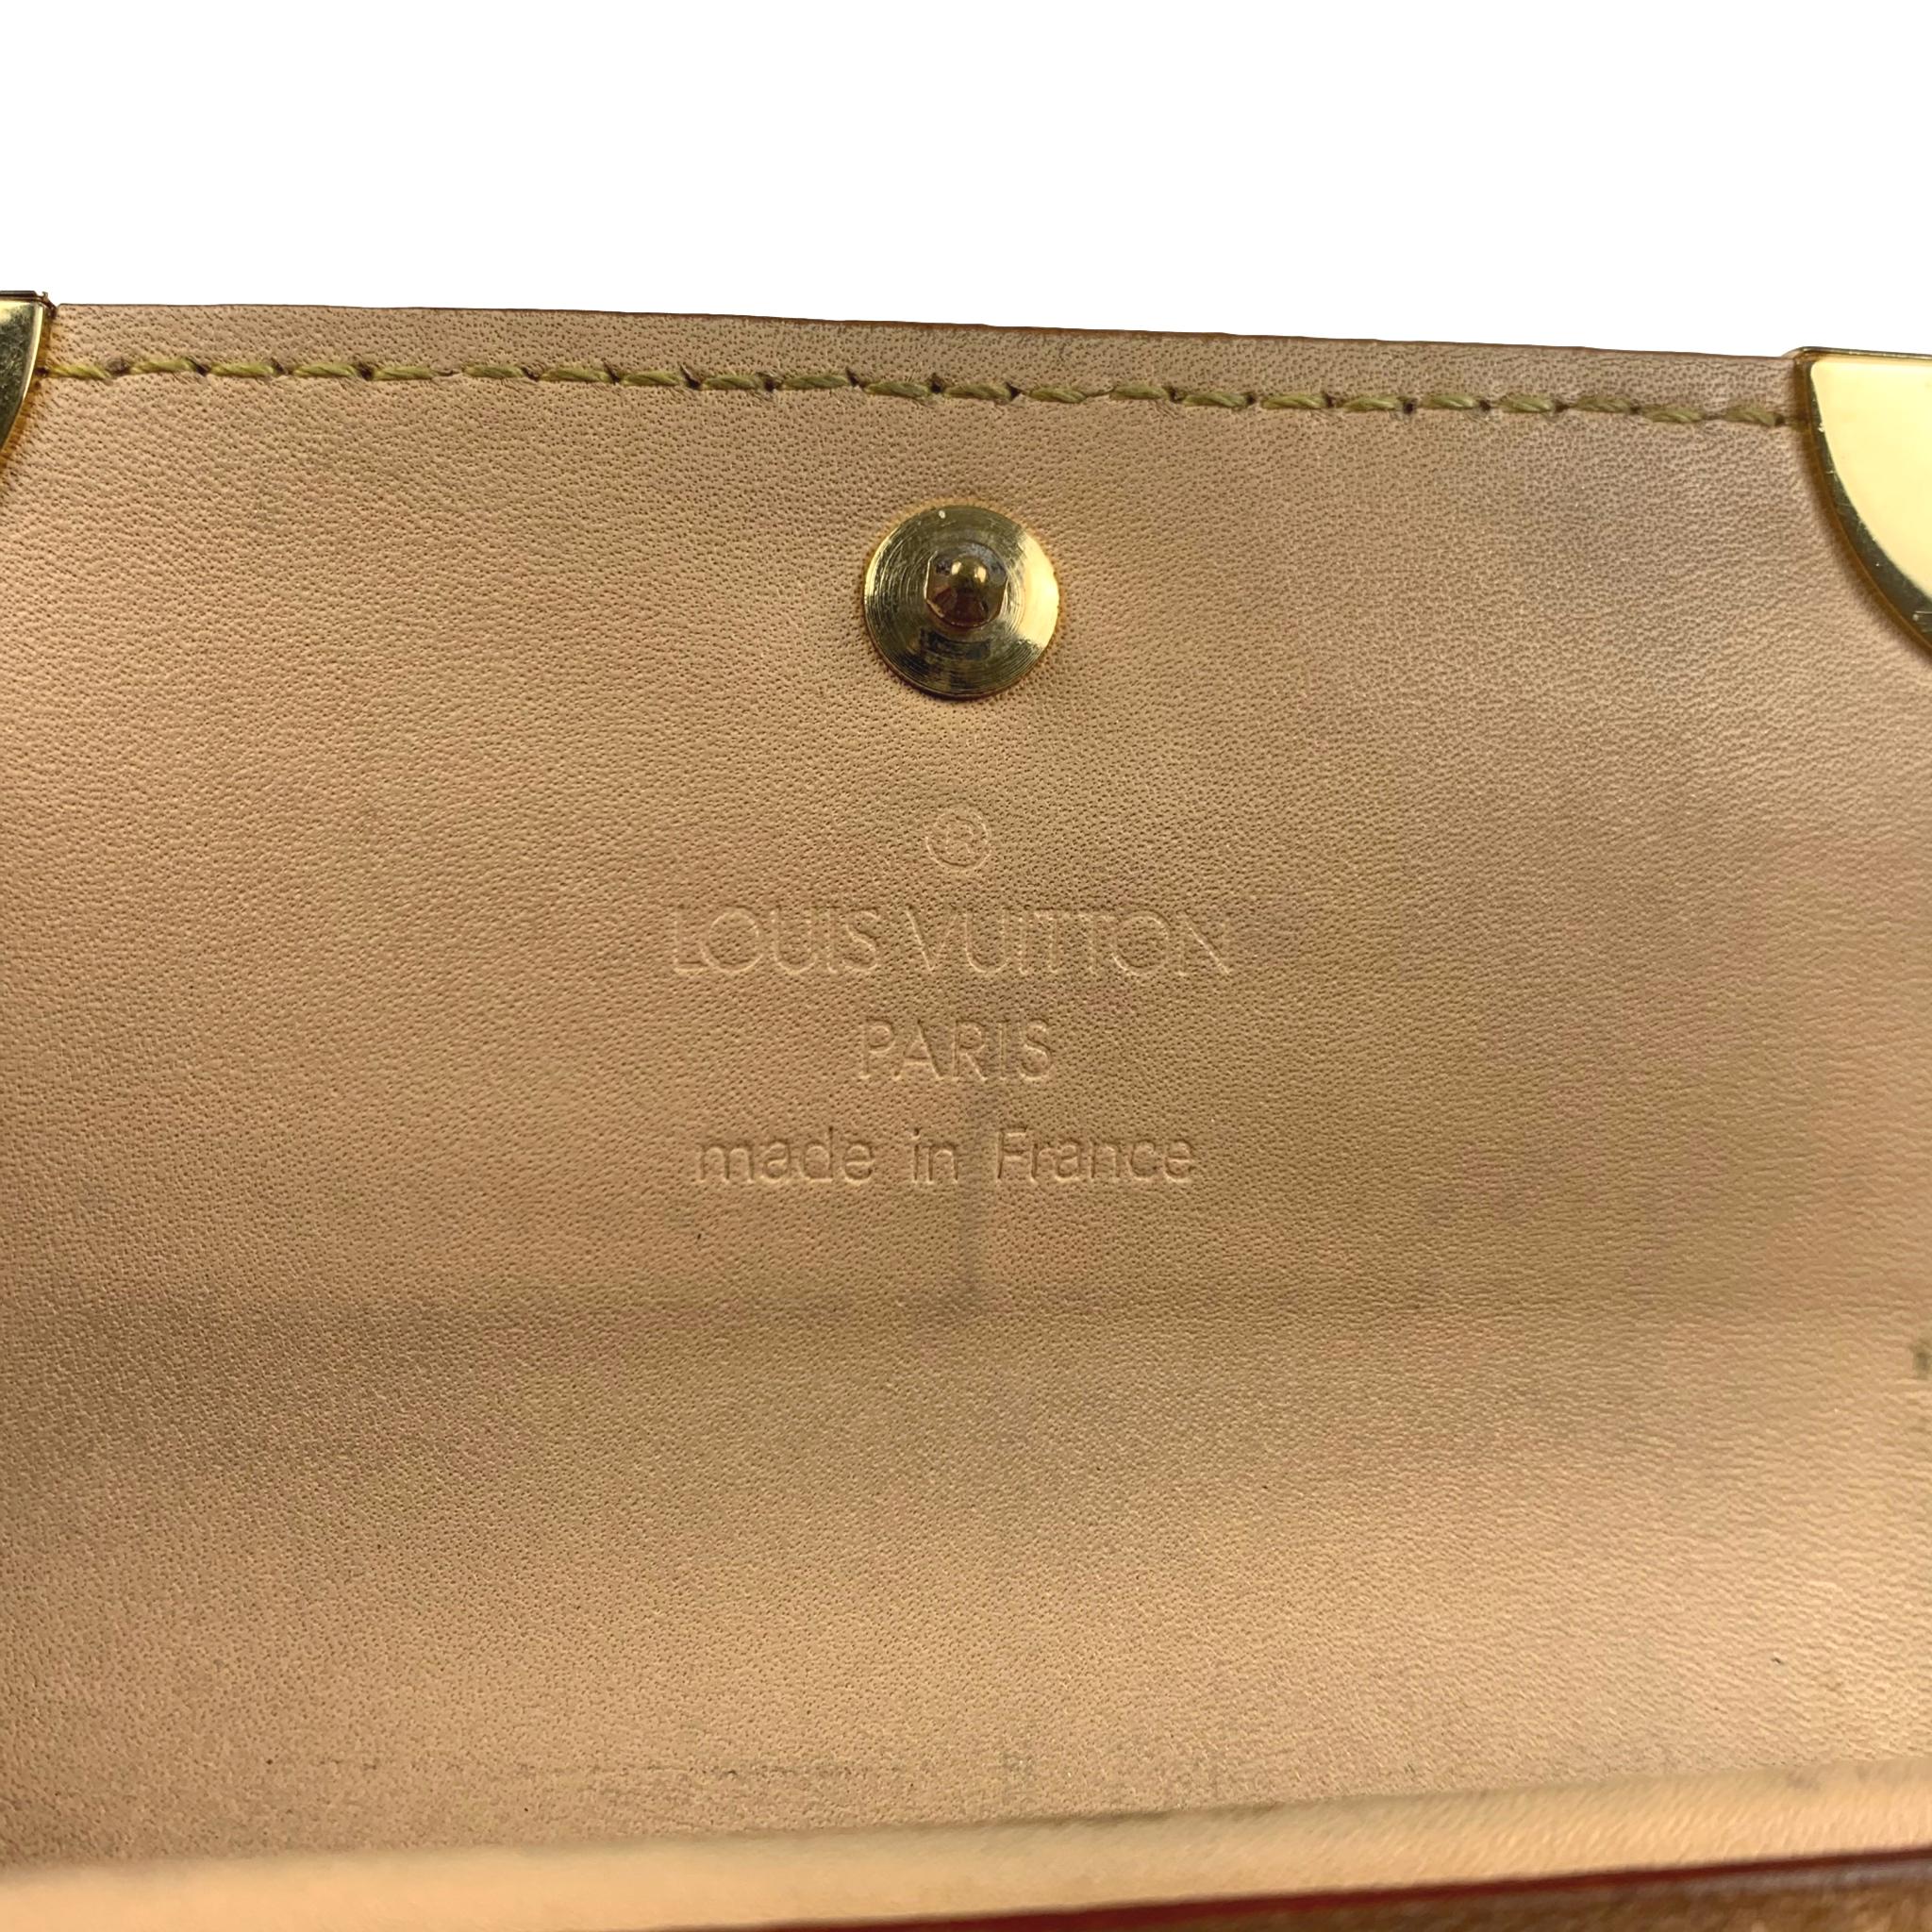 coin card holder small bag Louis Vuitton Multicolour in Plastic - 34228268